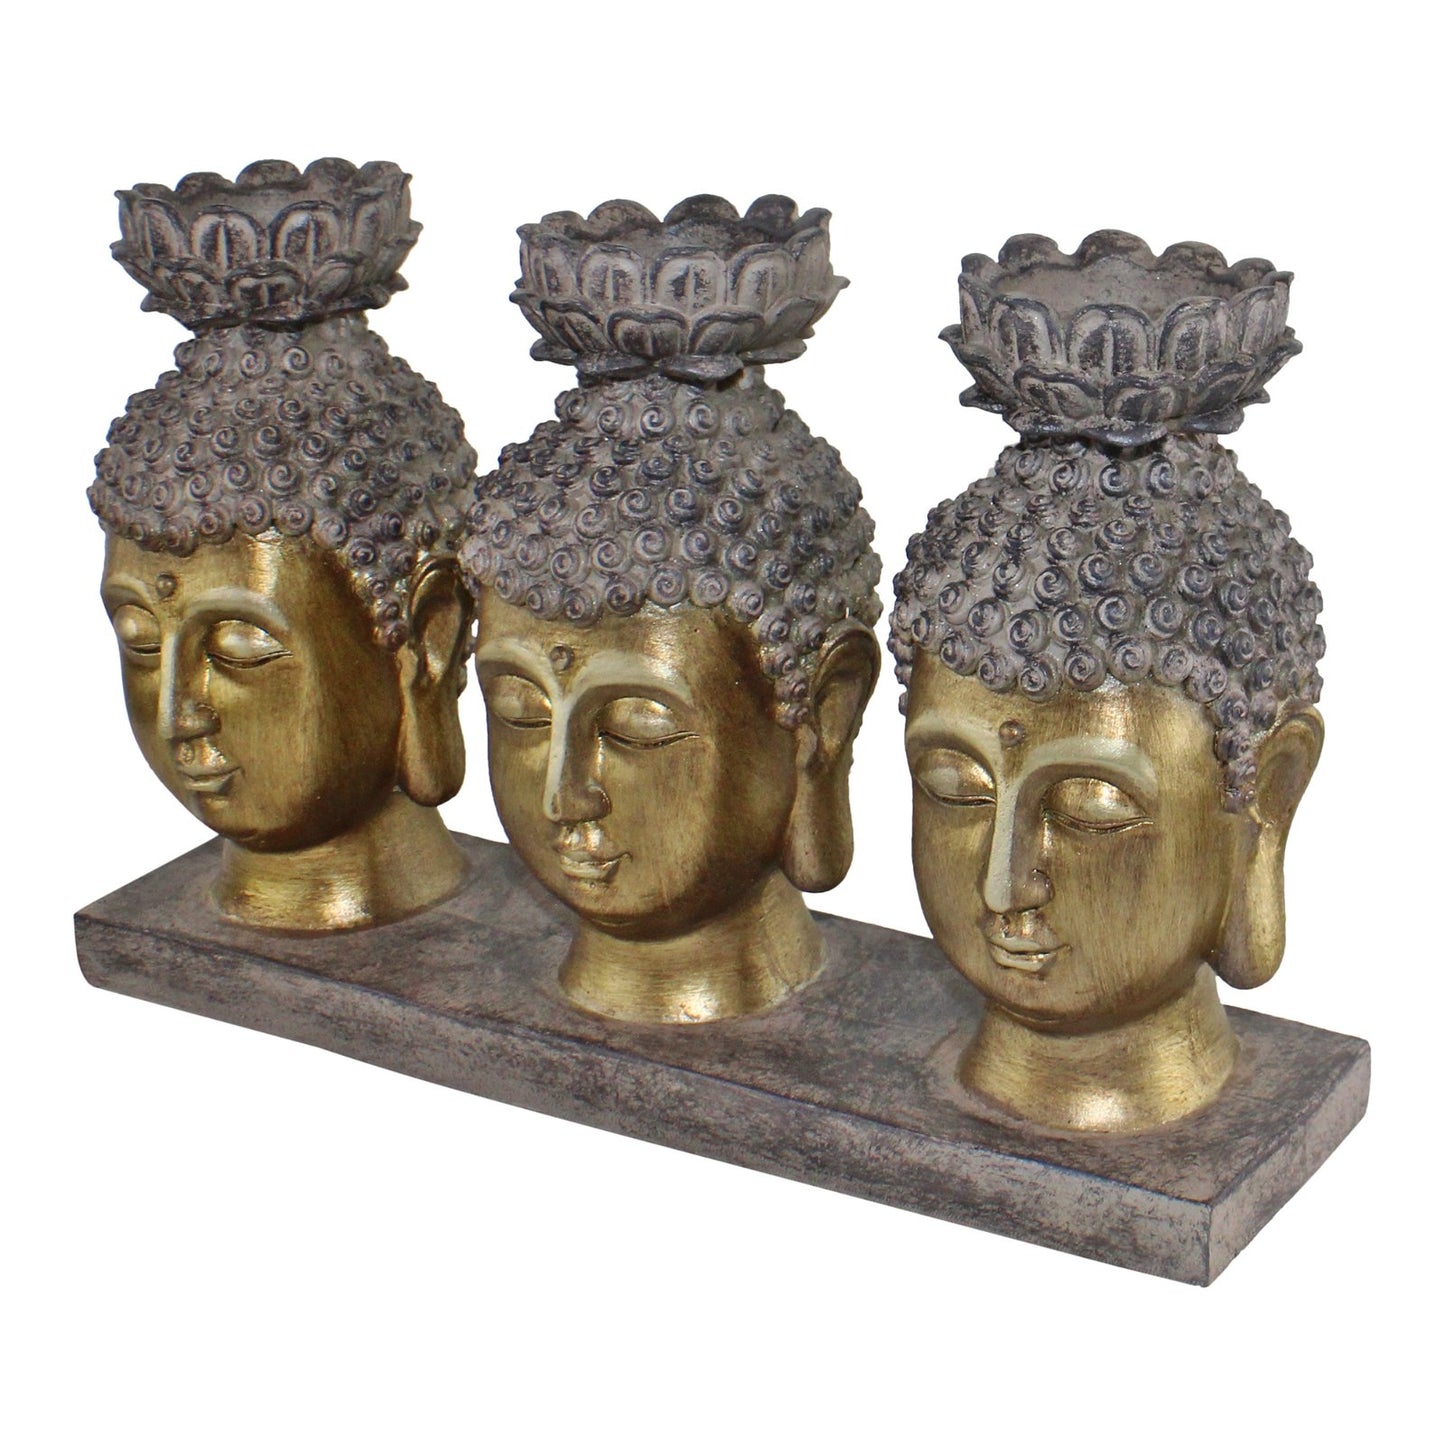 Triple Candle Holder, Buddha Design